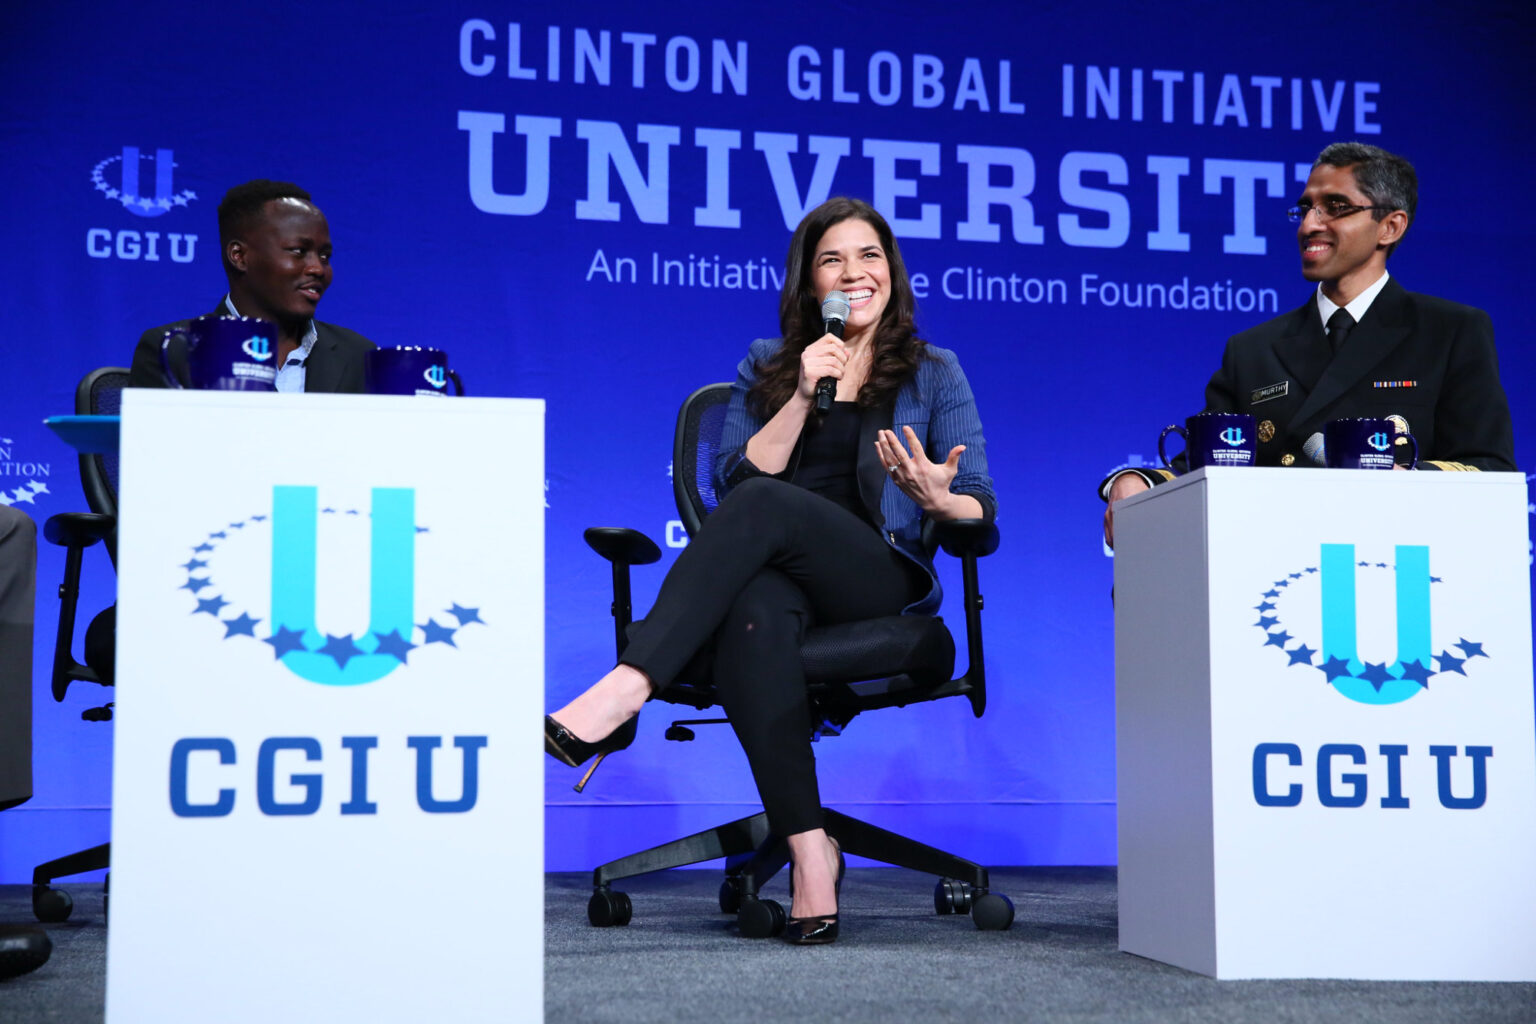 Clinton Global Initiative University – Clinton Foundation